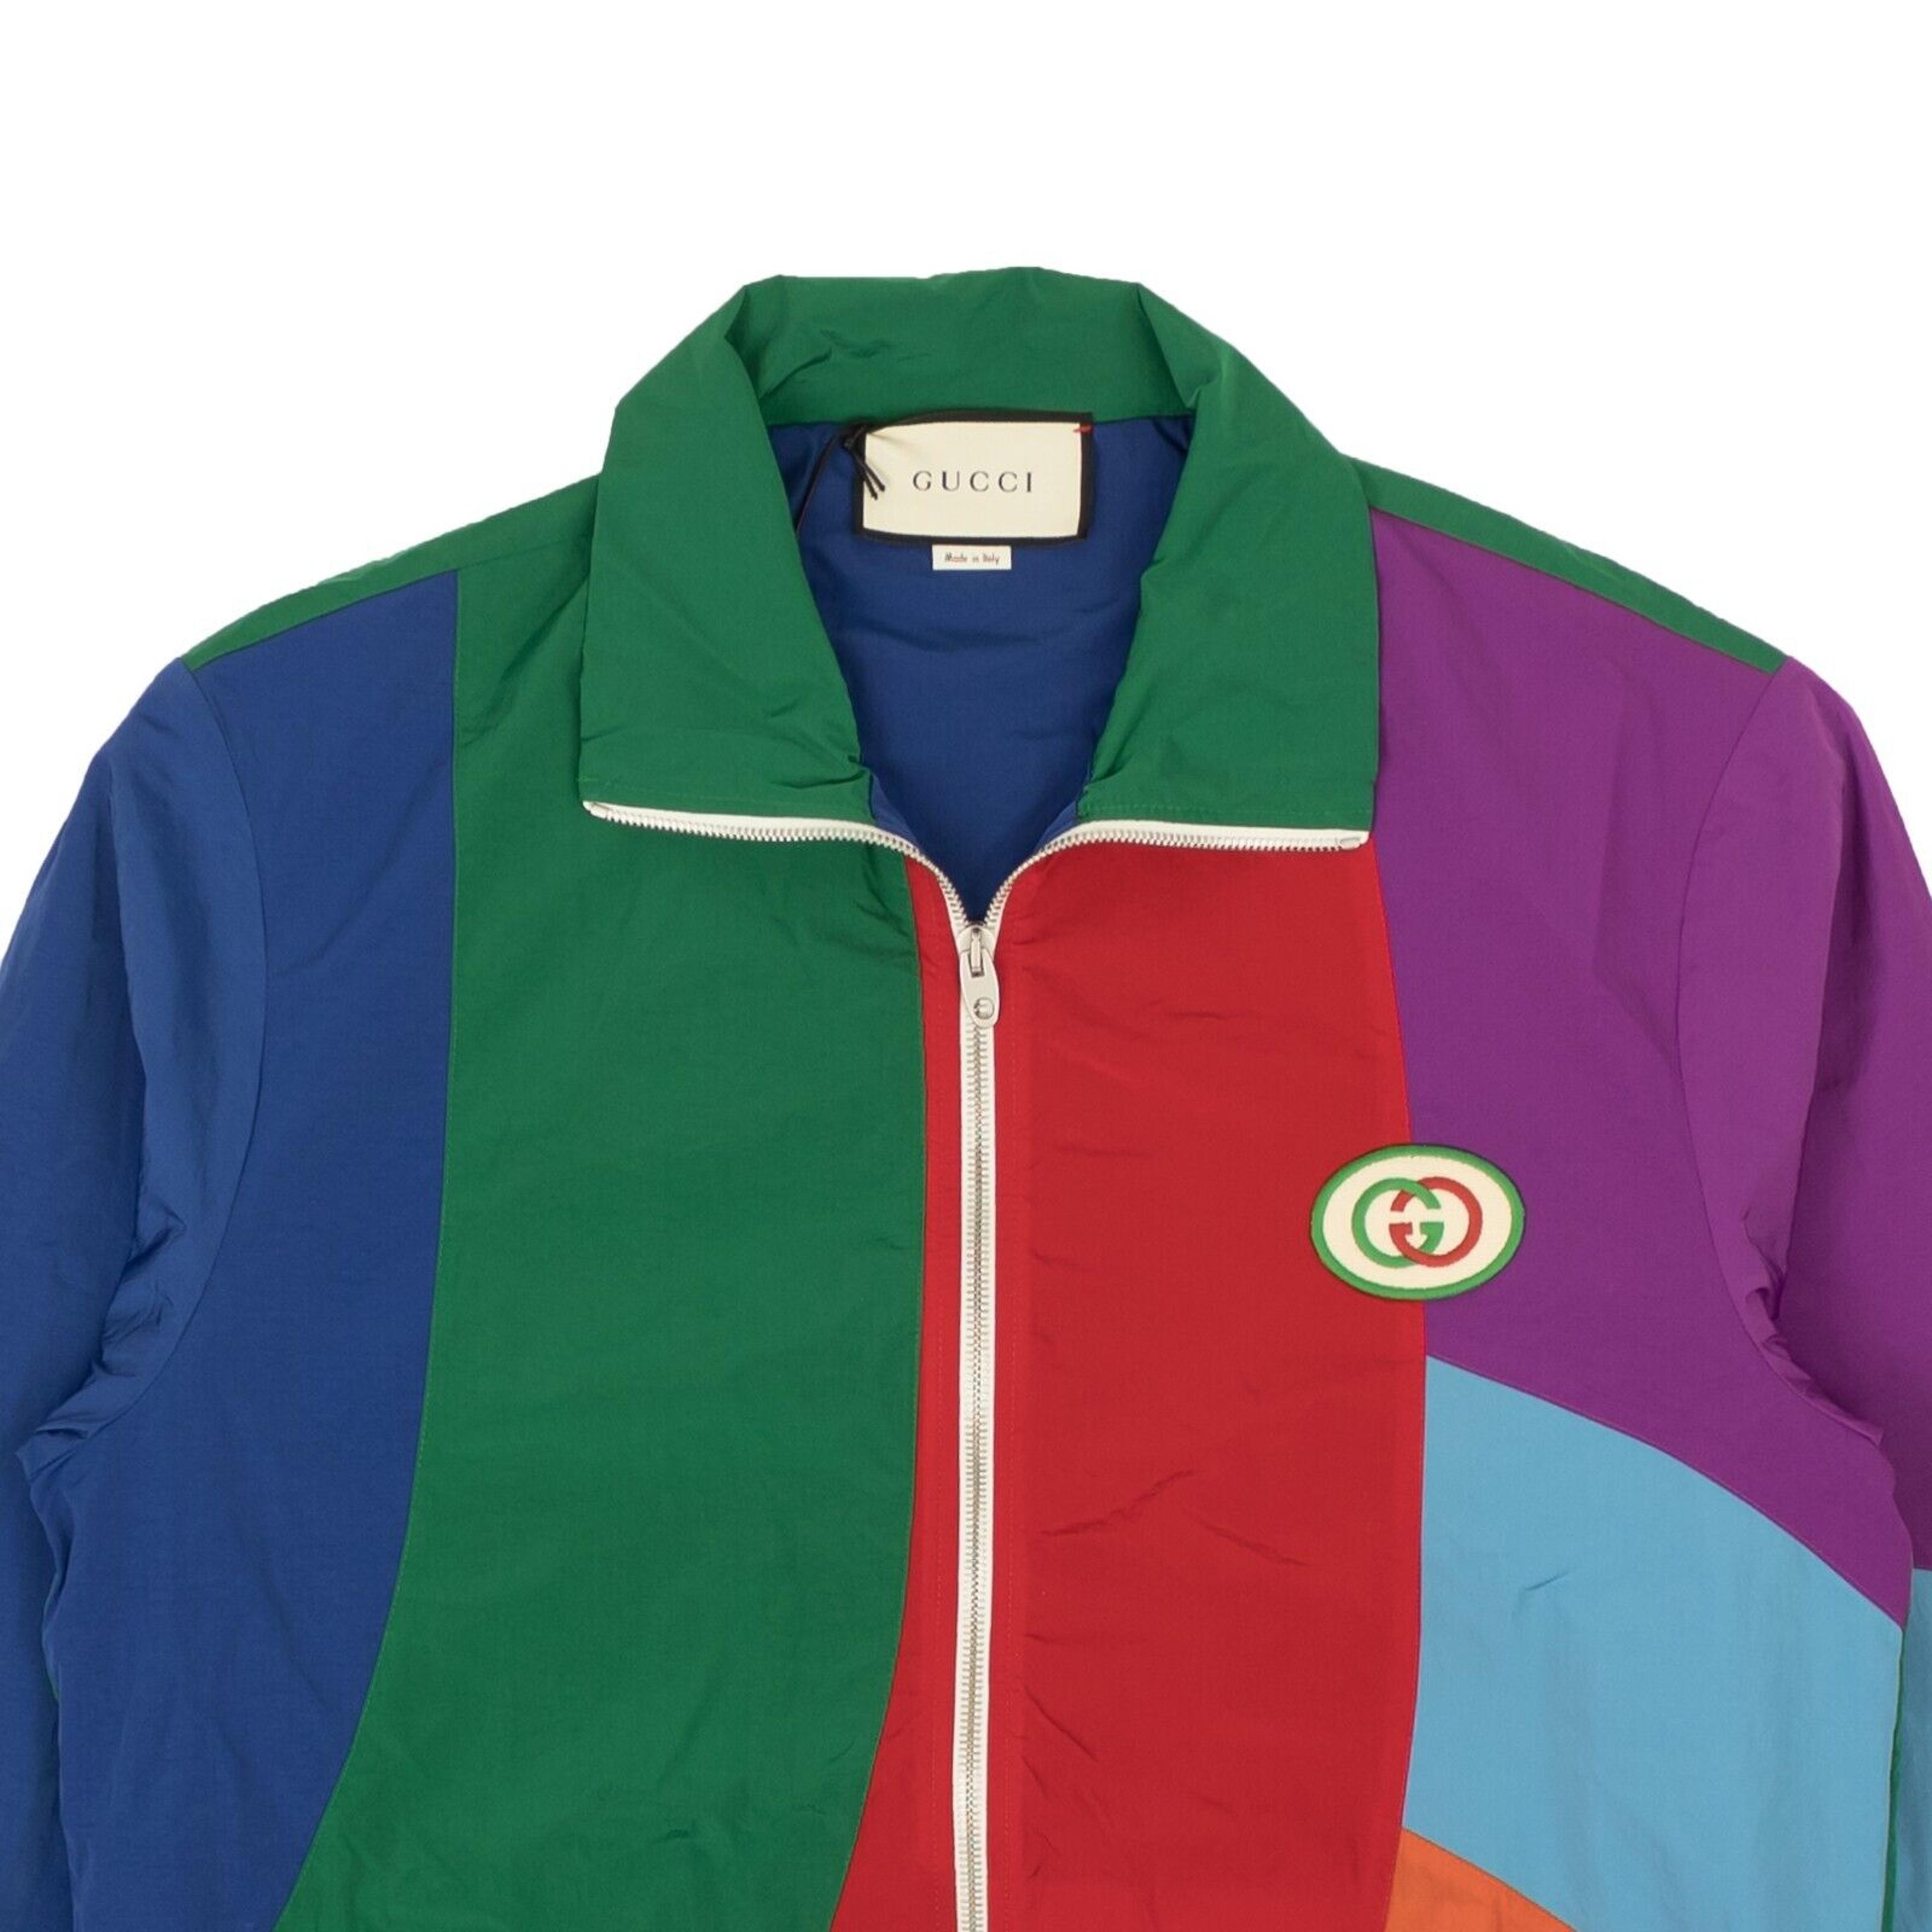 Alternate View 1 of Multicolor Geometric Nylon Track Jacket